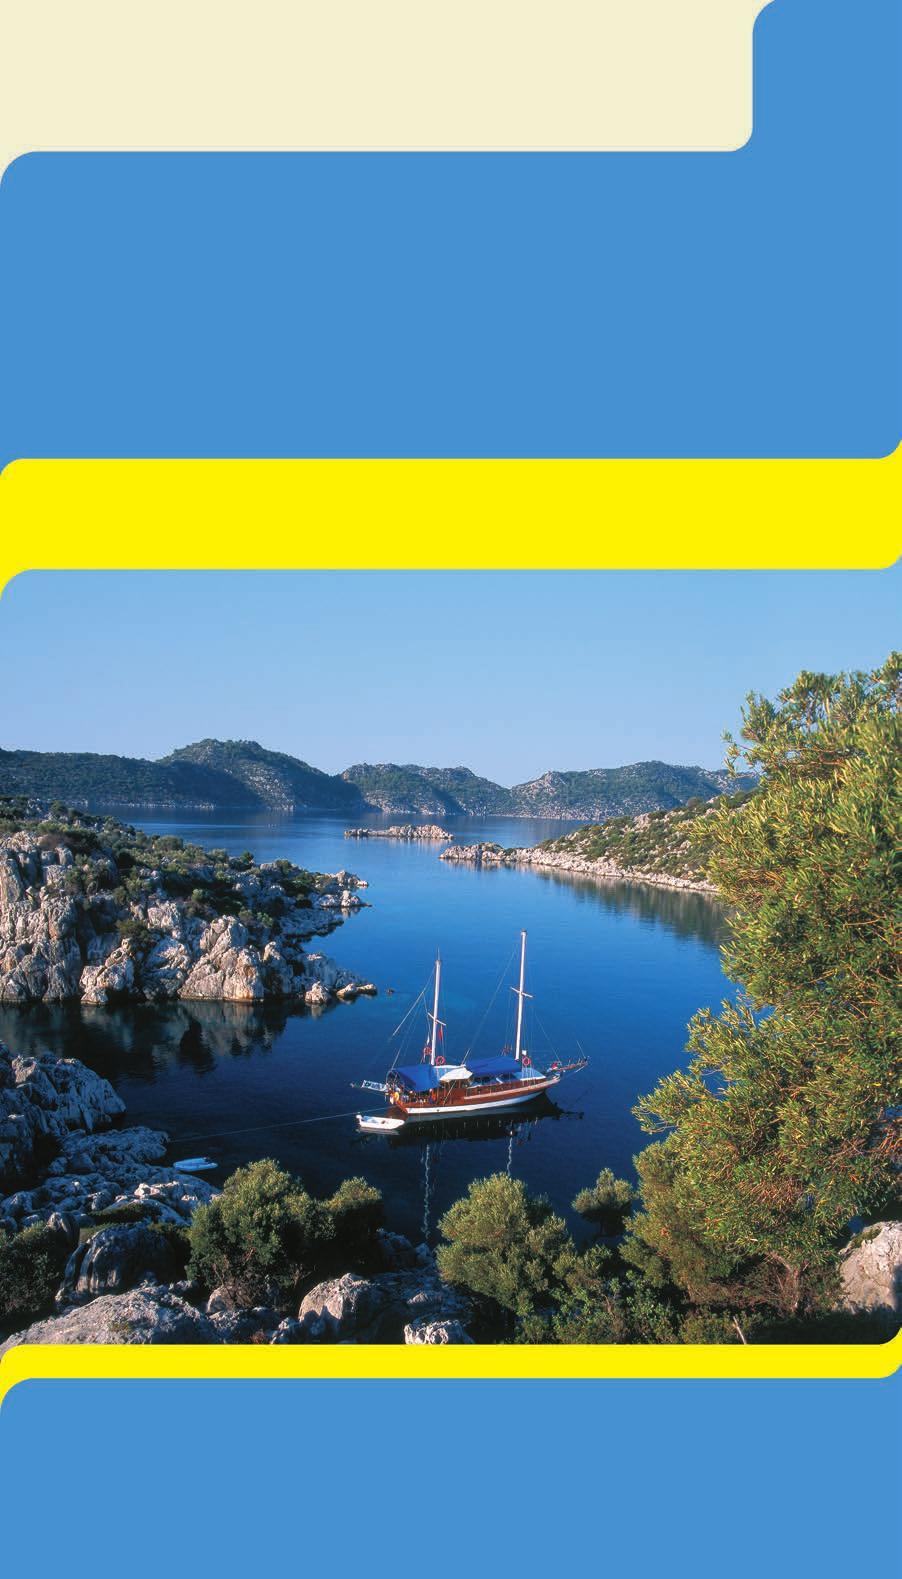 UCLA Alumni Travel presents LEGENDARY TURKEY From Istanbul to the Turquoise Coast